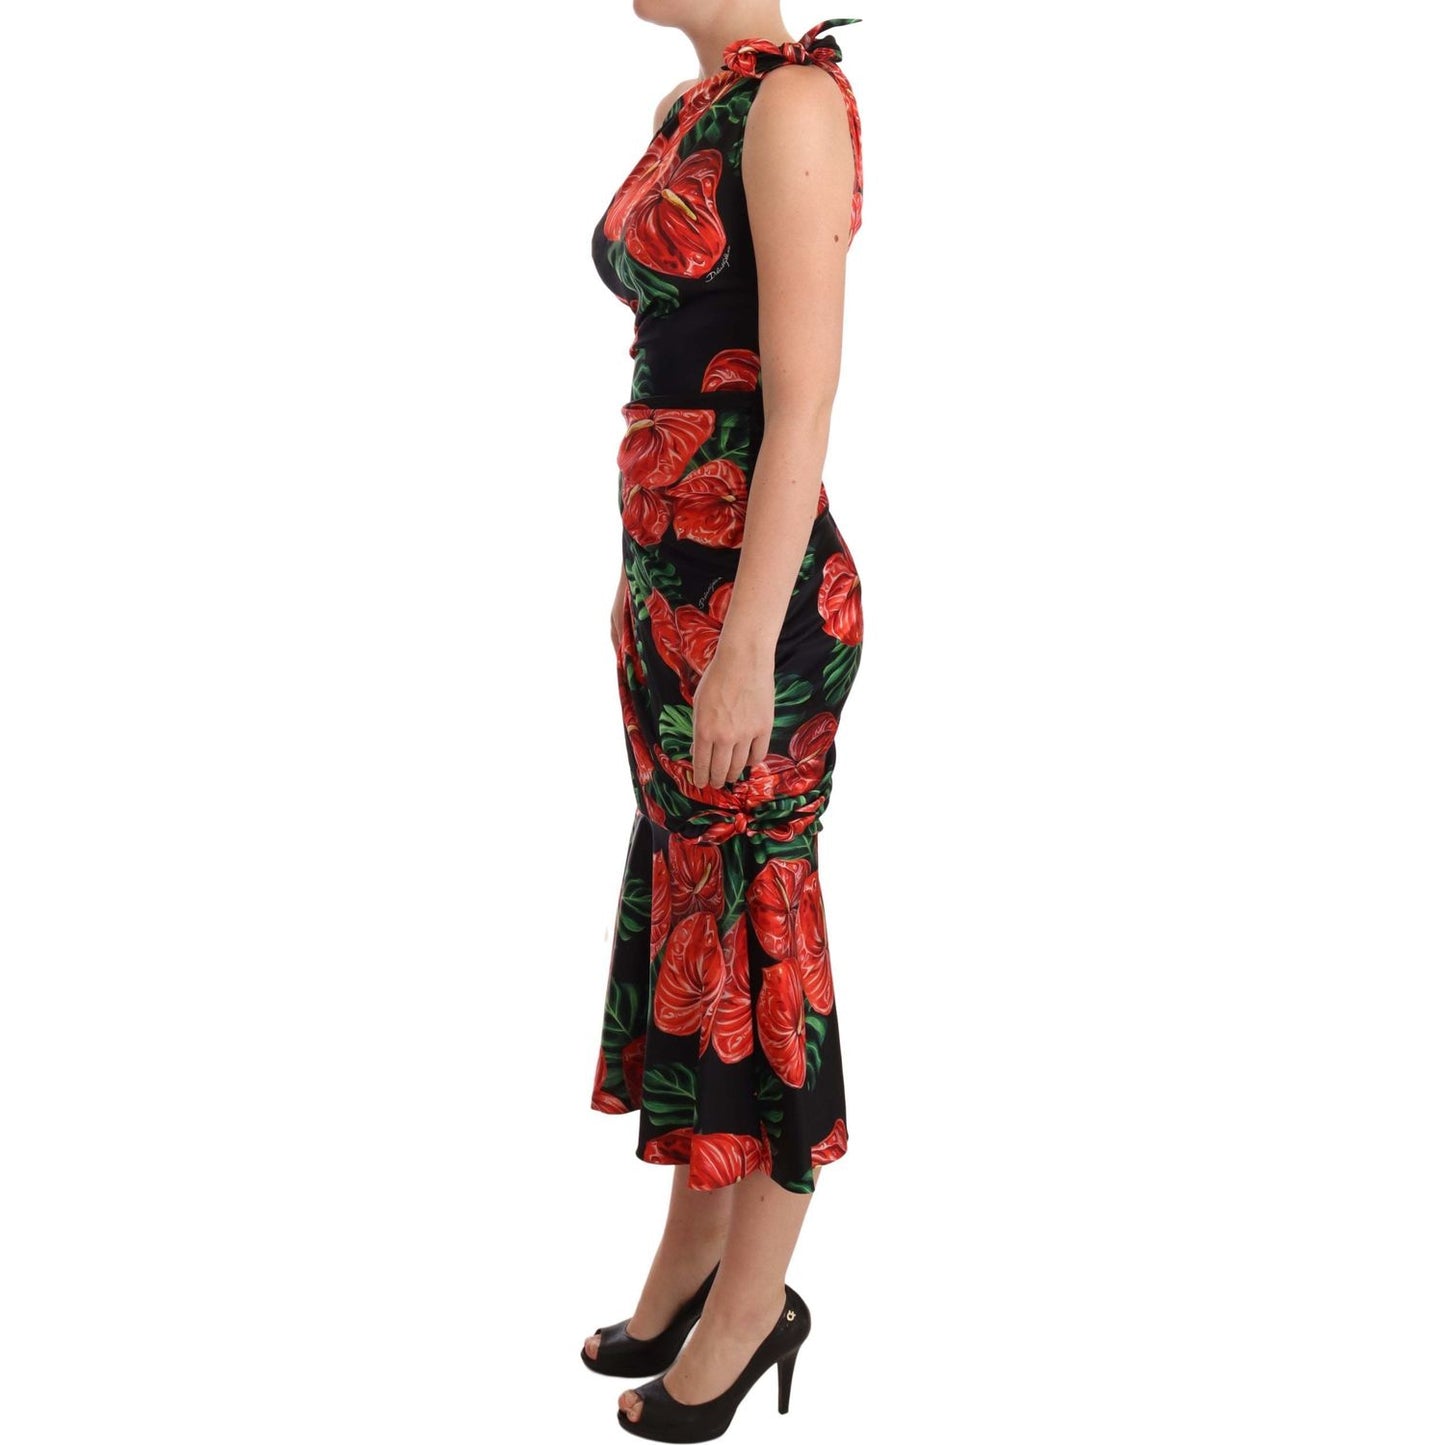 Dolce & Gabbana Black Shiny Silk Floral Print Draped Dress black-shiny-silk-floral-print-draped-dress WOMAN DRESSES IMG_1464-scaled-39bd929b-a41.jpg